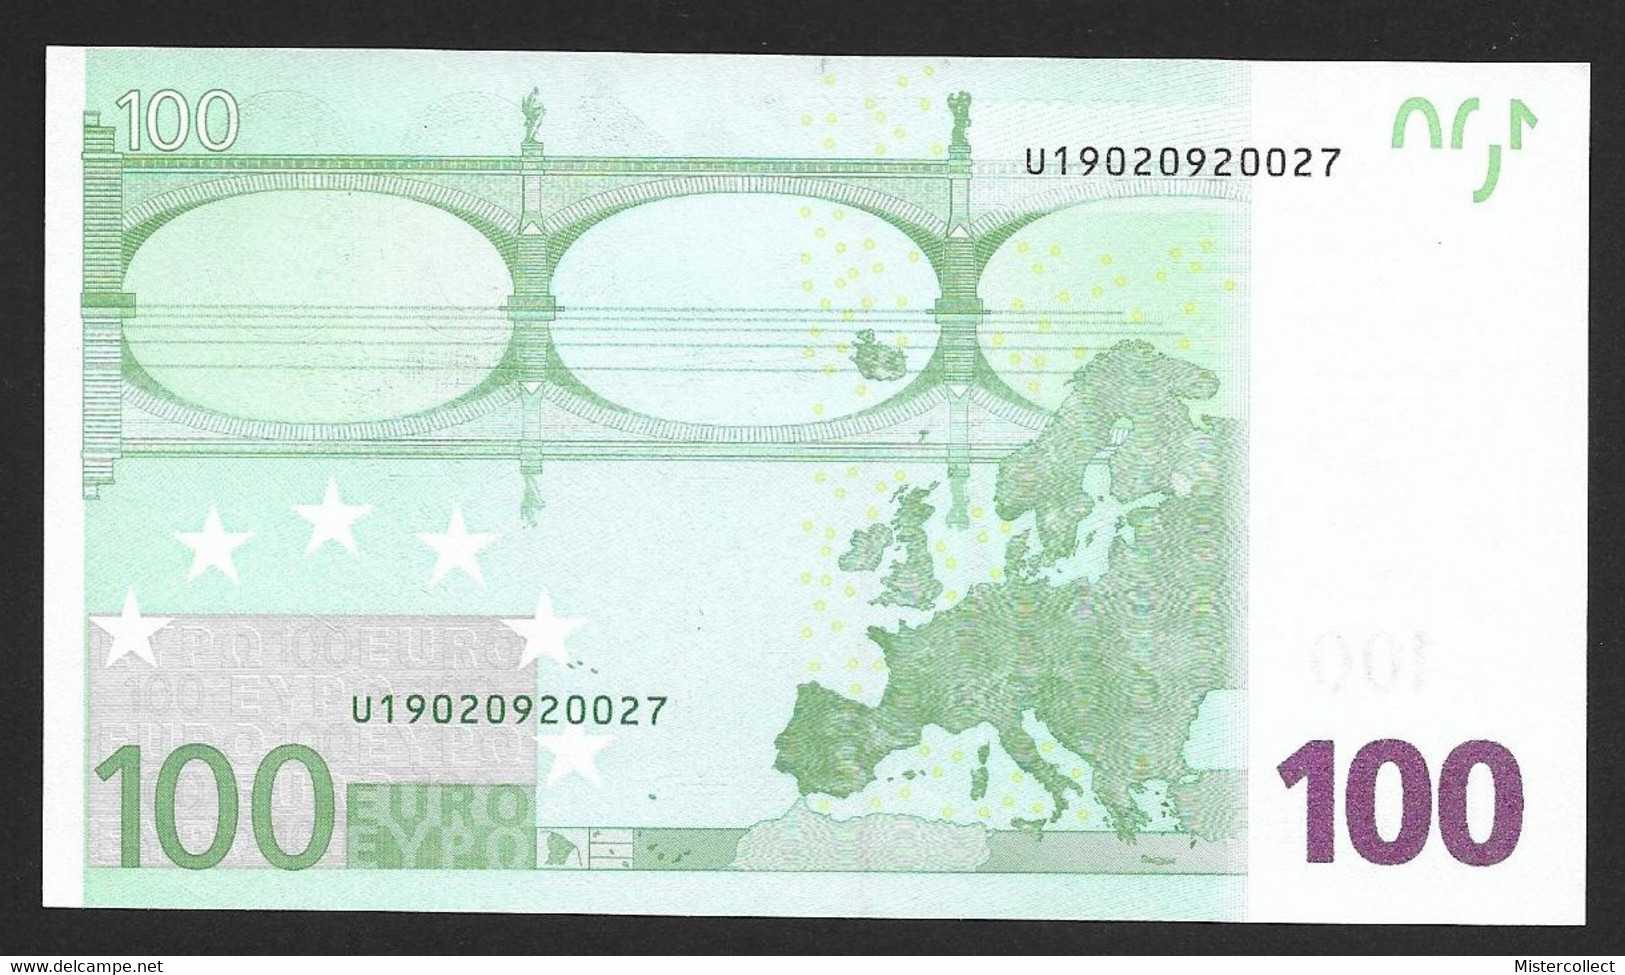 2 Billets Consécutifs 100 Euros 2002 Signature Wim Duisenberg TRÈS RARE - 100 Euro